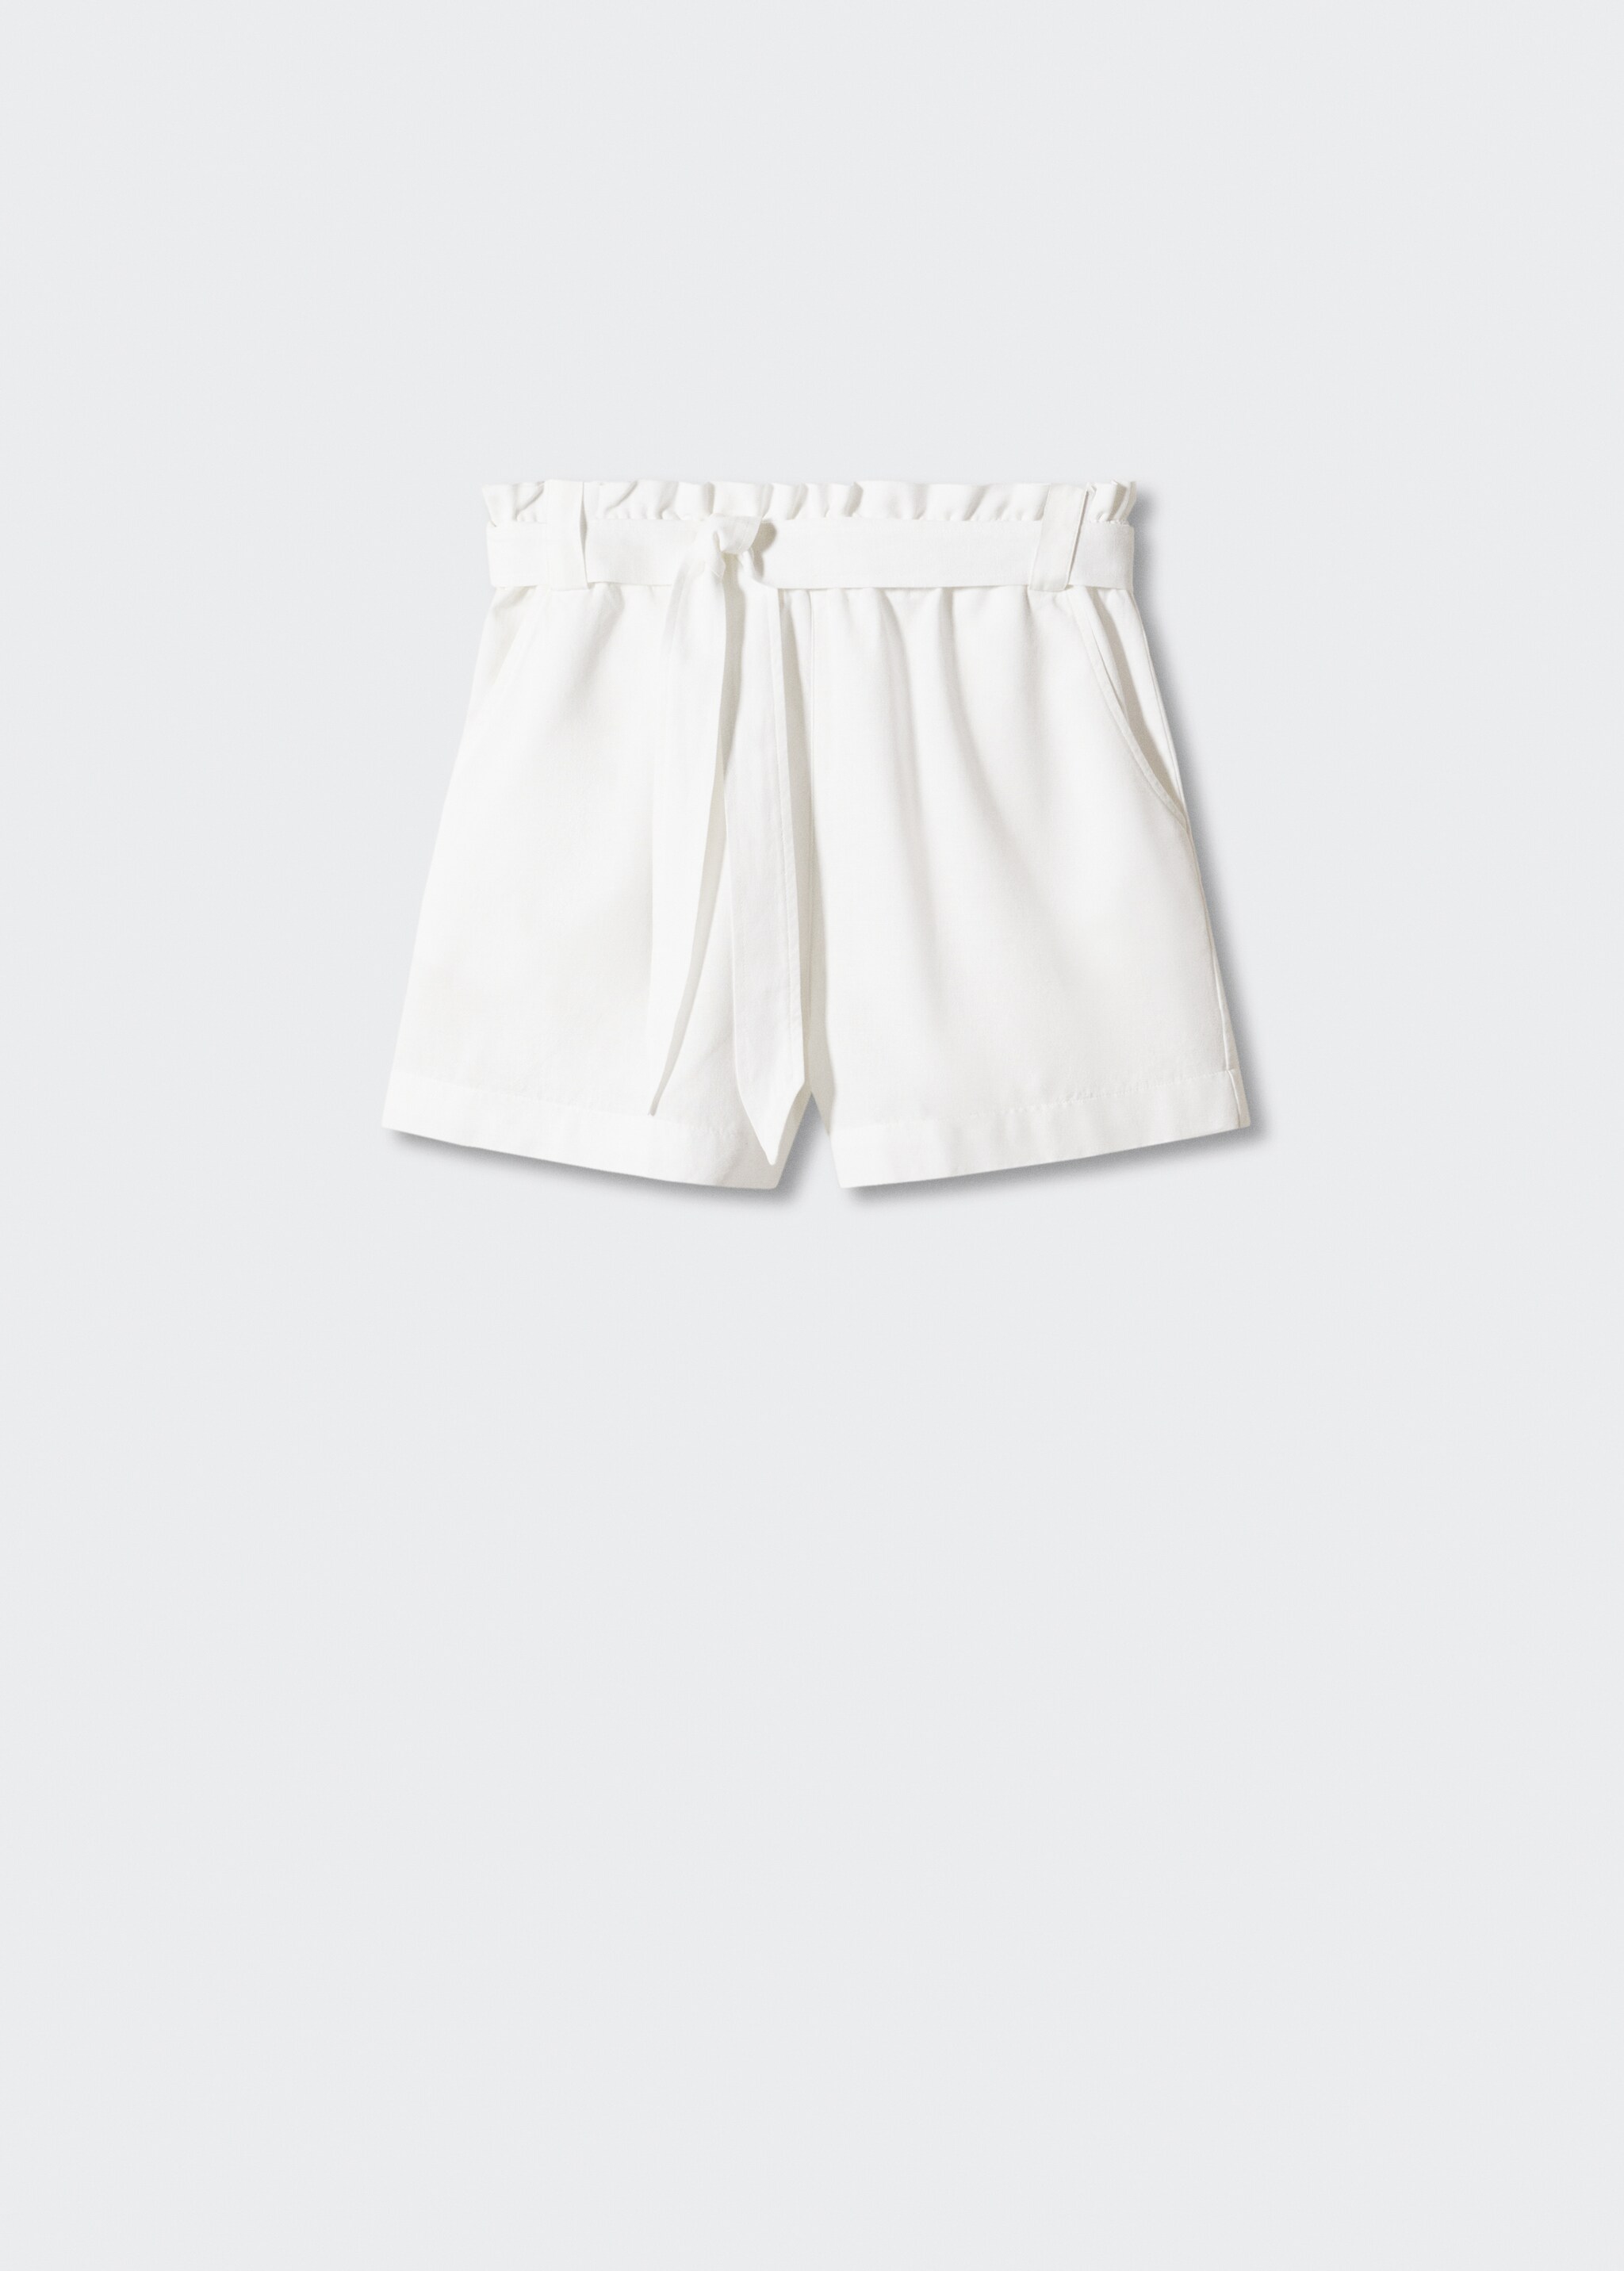 Cotton linen shorts - Article without model